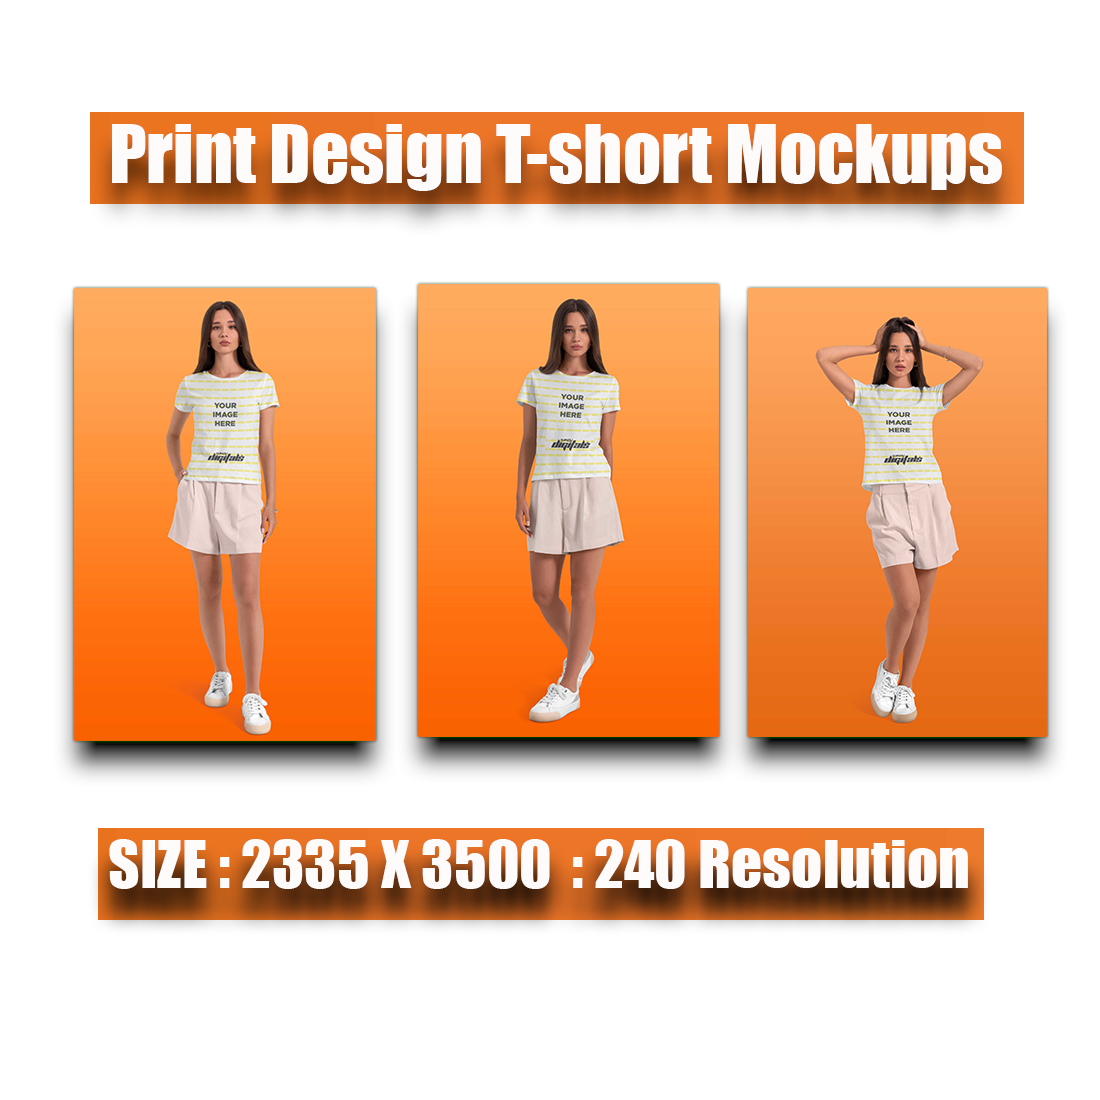 3 Print Design T-Short Girls Mock-up Templates cover image.